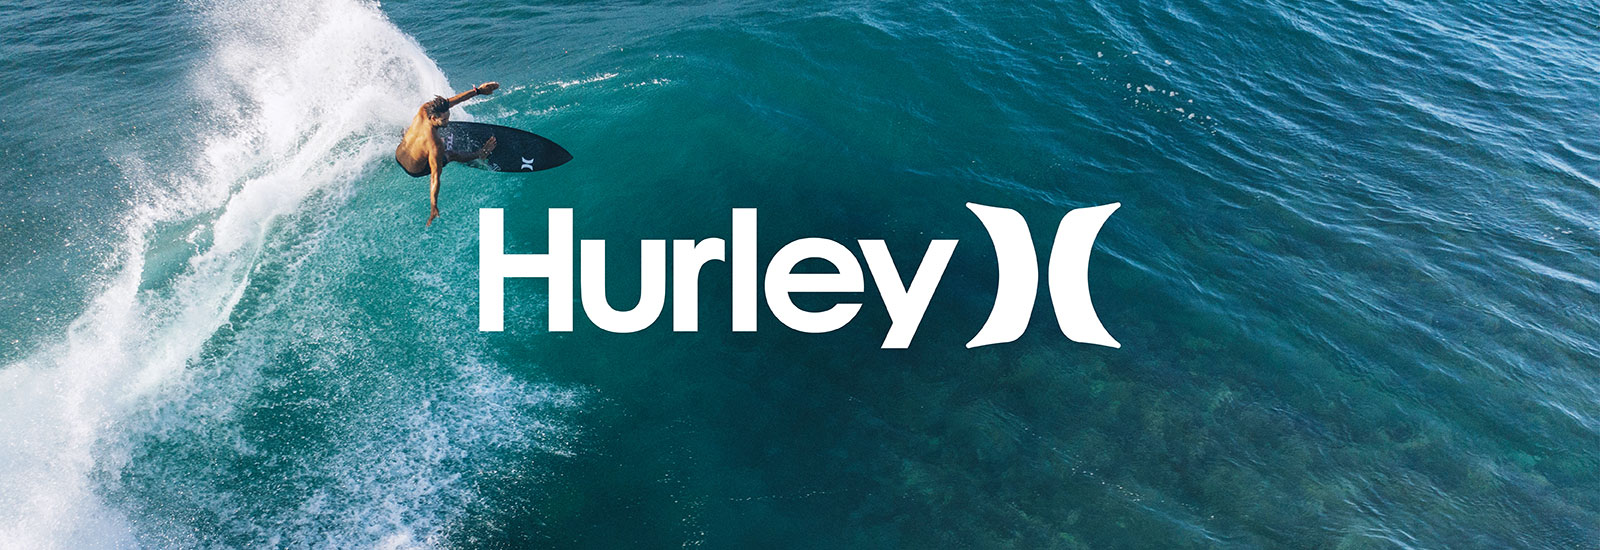 Hurley brand t shirt XL beach surf Skateboard skater brand Blue